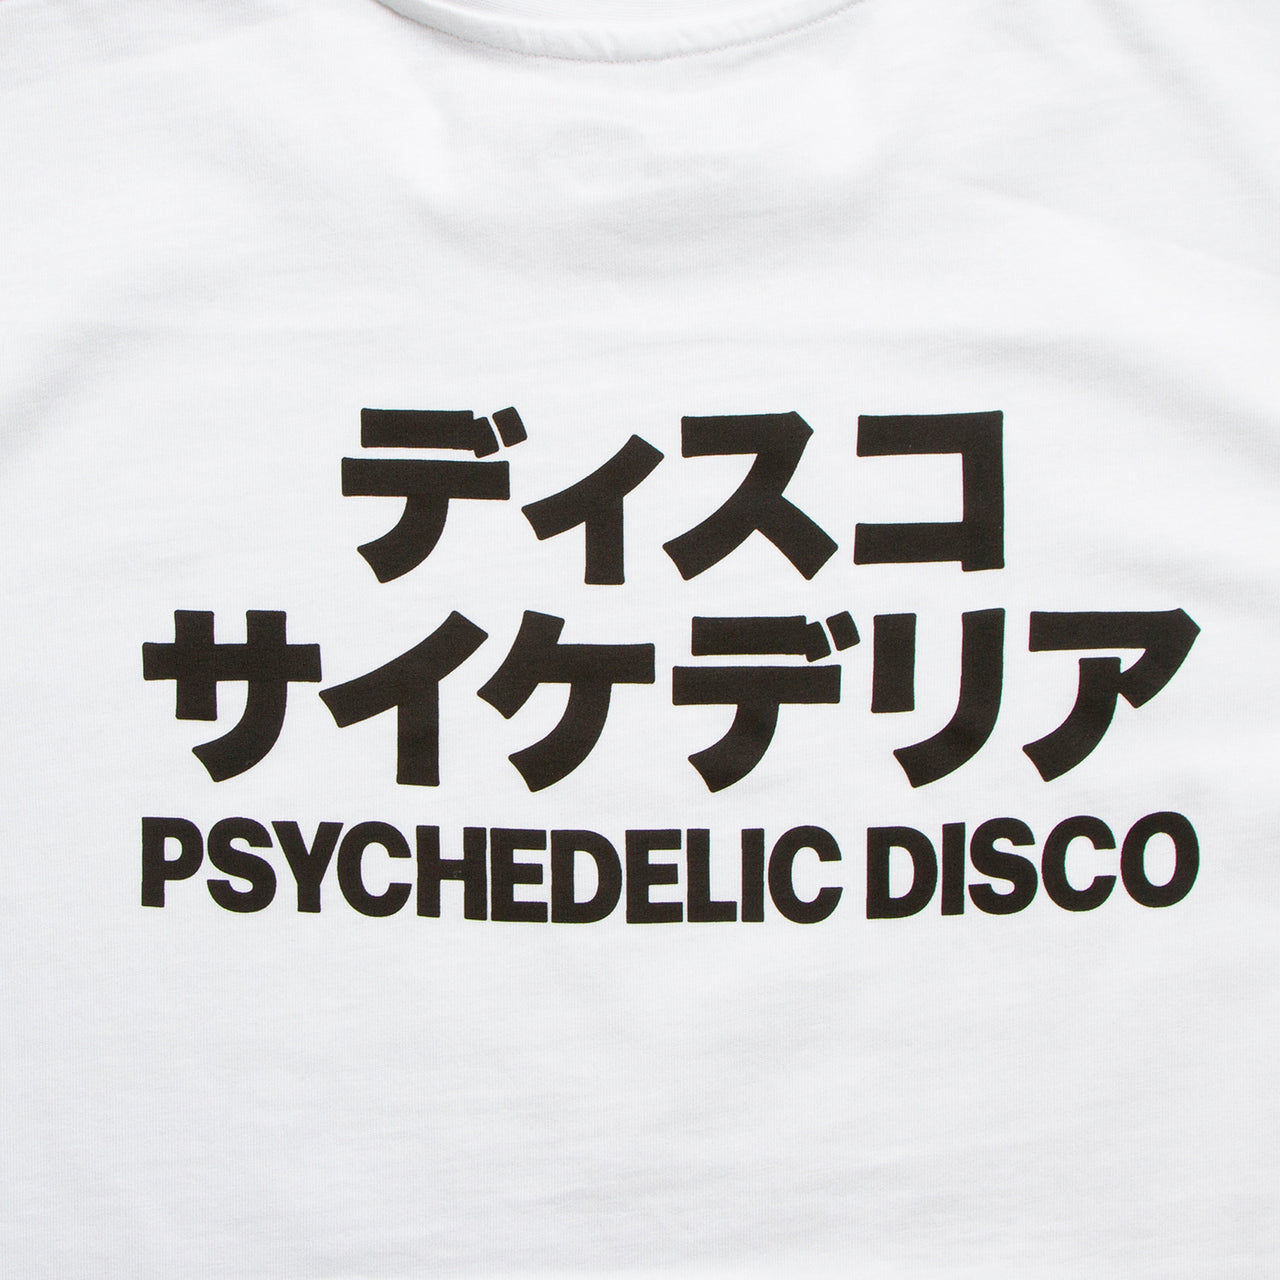 PD Reg Psychedelic Disco Back Print - Tshirt - White